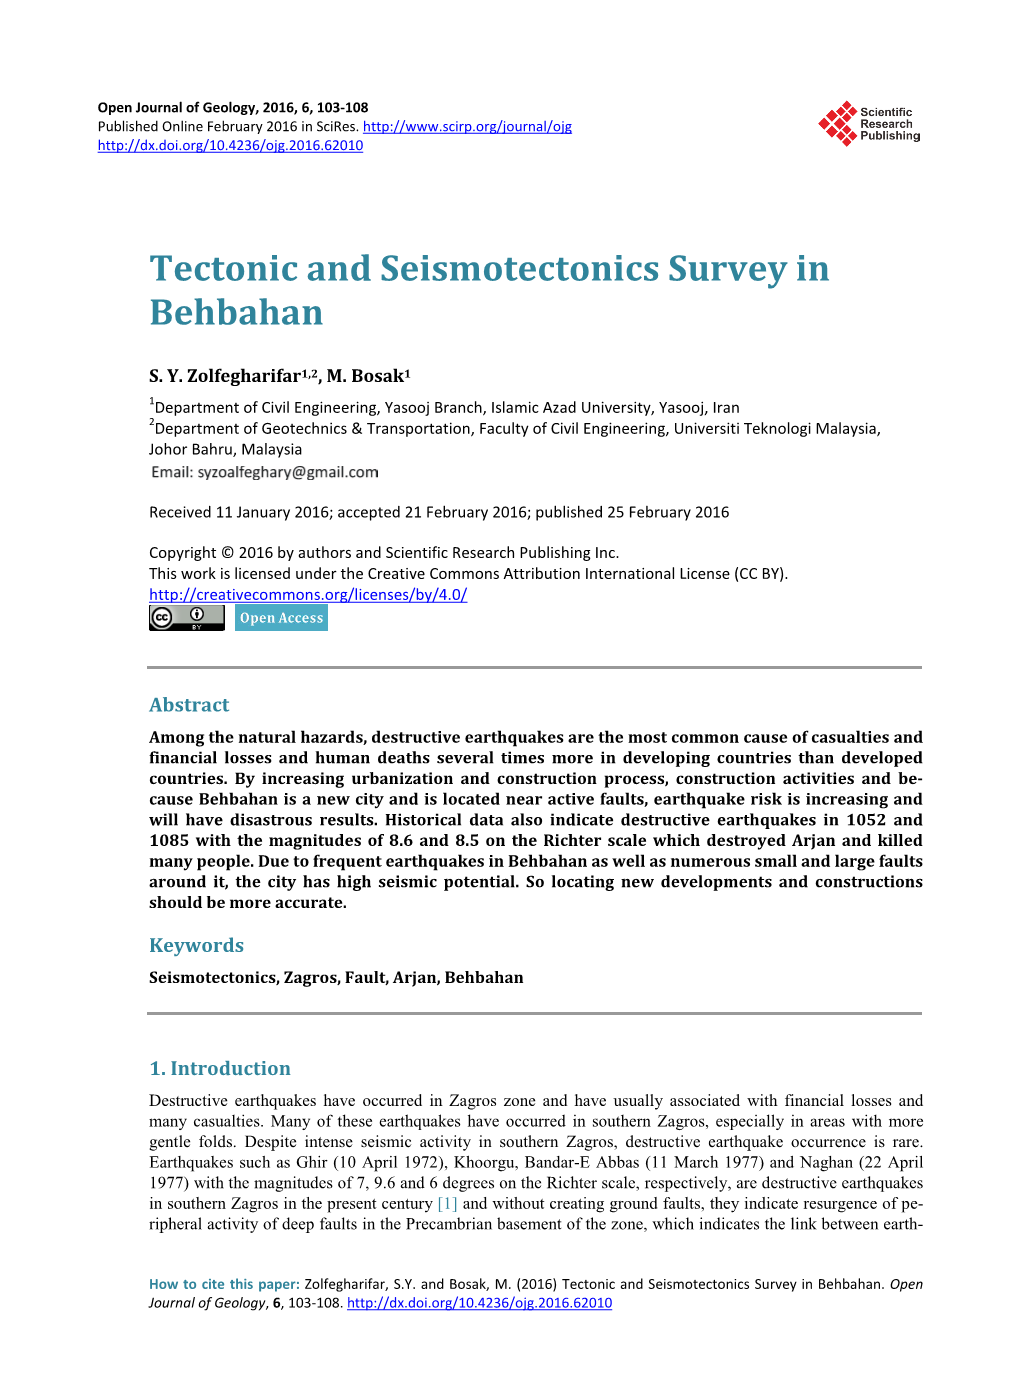 Tectonic and Seismotectonics Survey in Behbahan